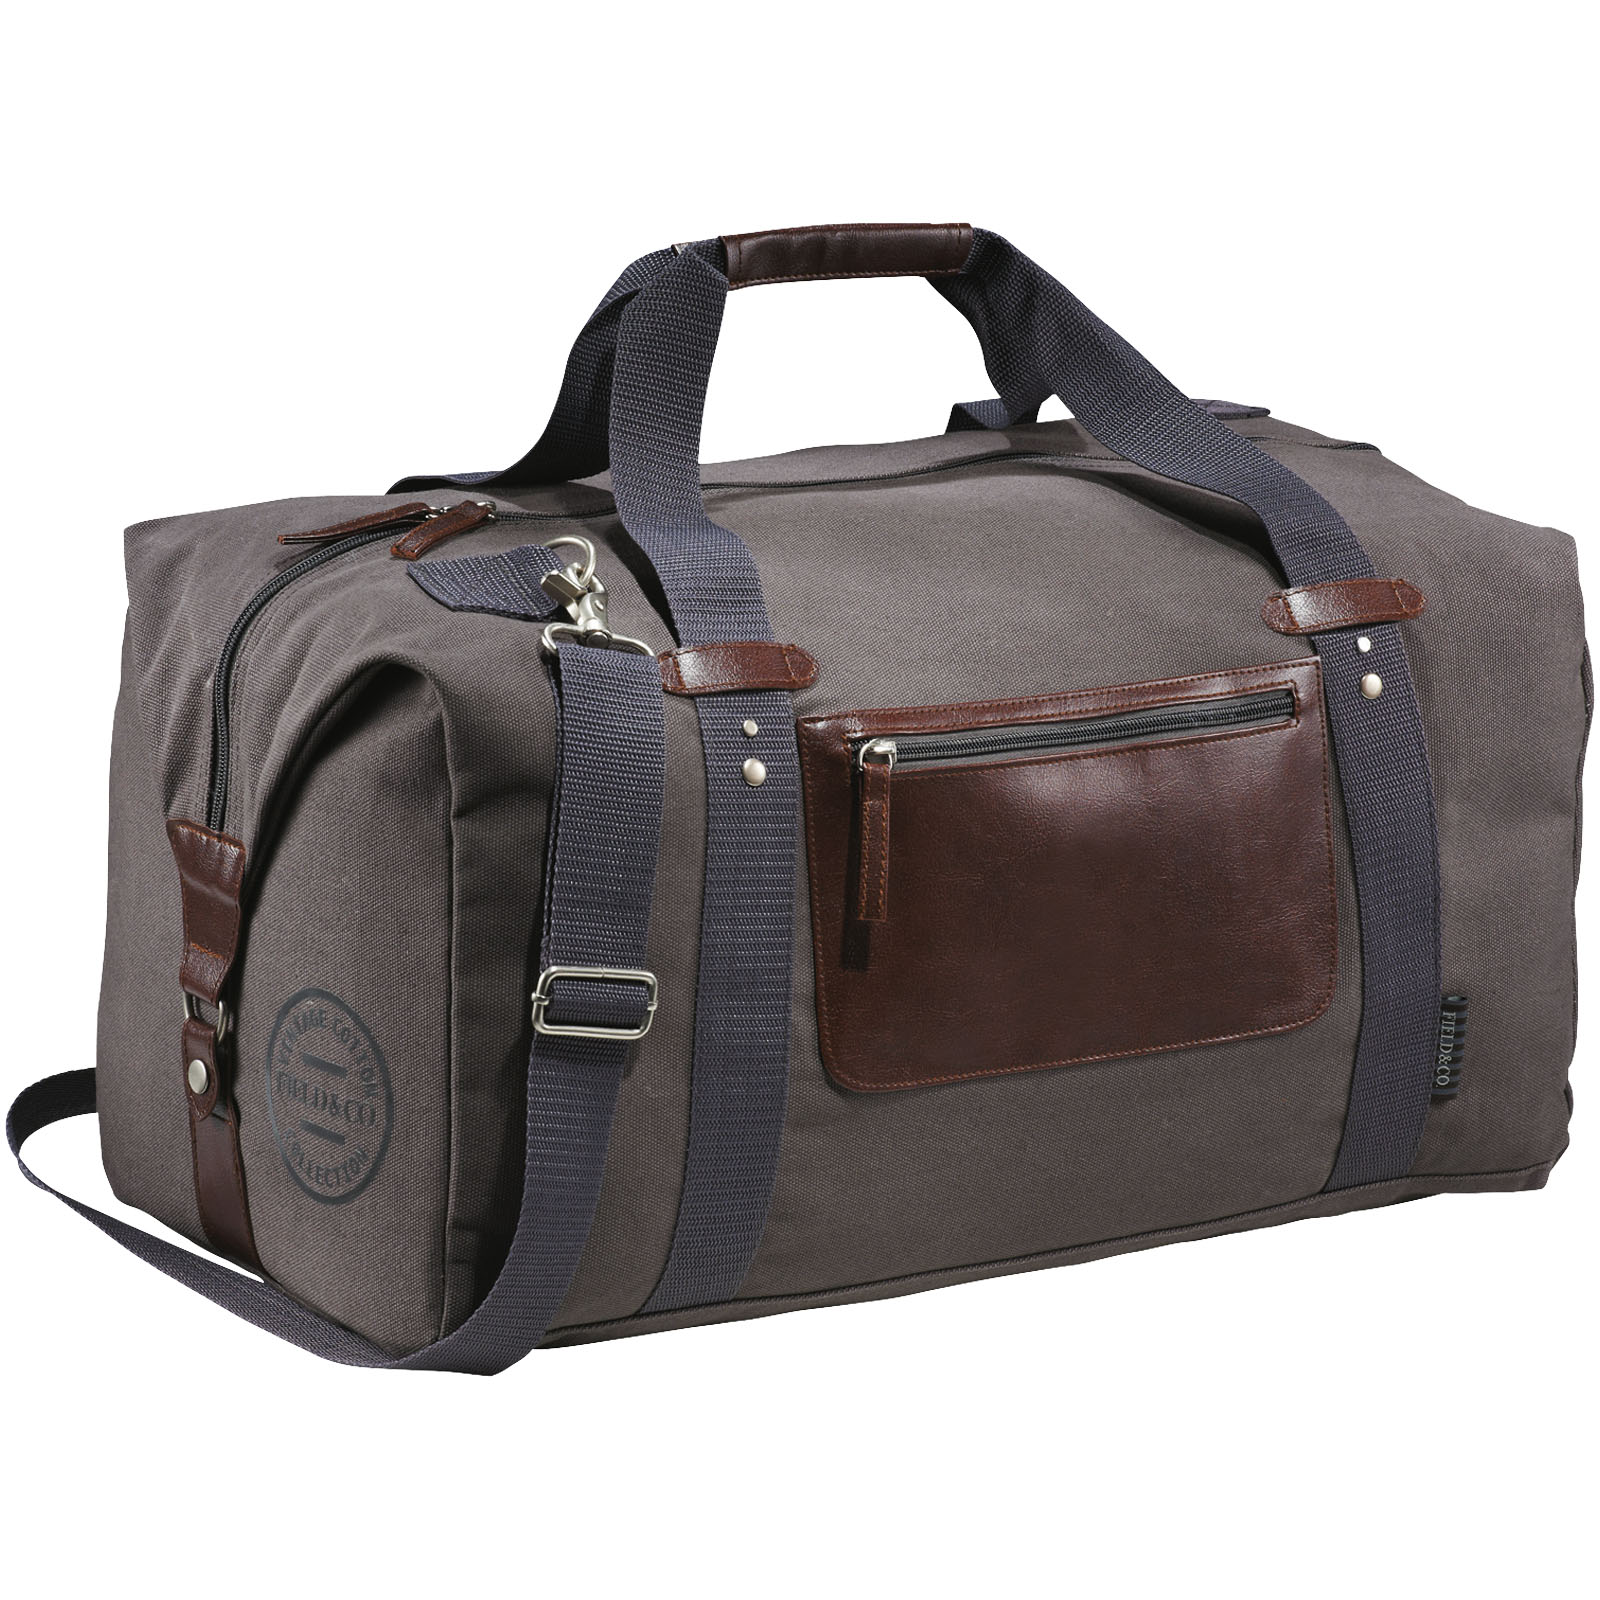 Bags - Classic duffel bag 37L